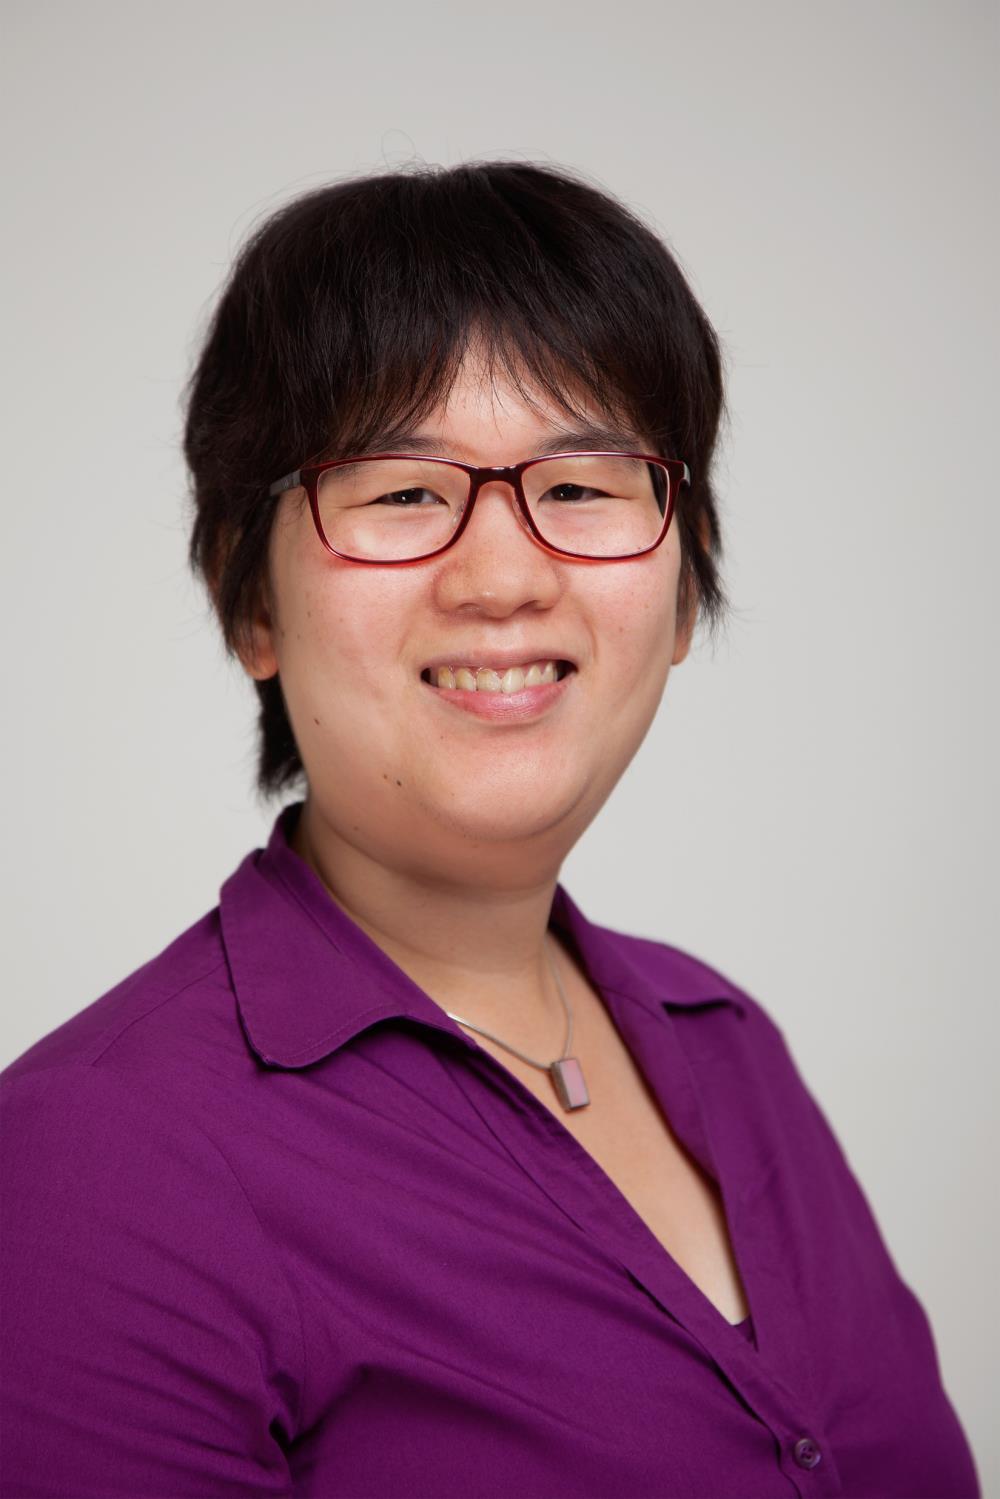 Aisha Sie Achtergrond Arts, niet praktiserend (Rijksuniversiteit Groningen) PhD (2015: afdeling Genetica, Radboudumc) ICT hobbyist